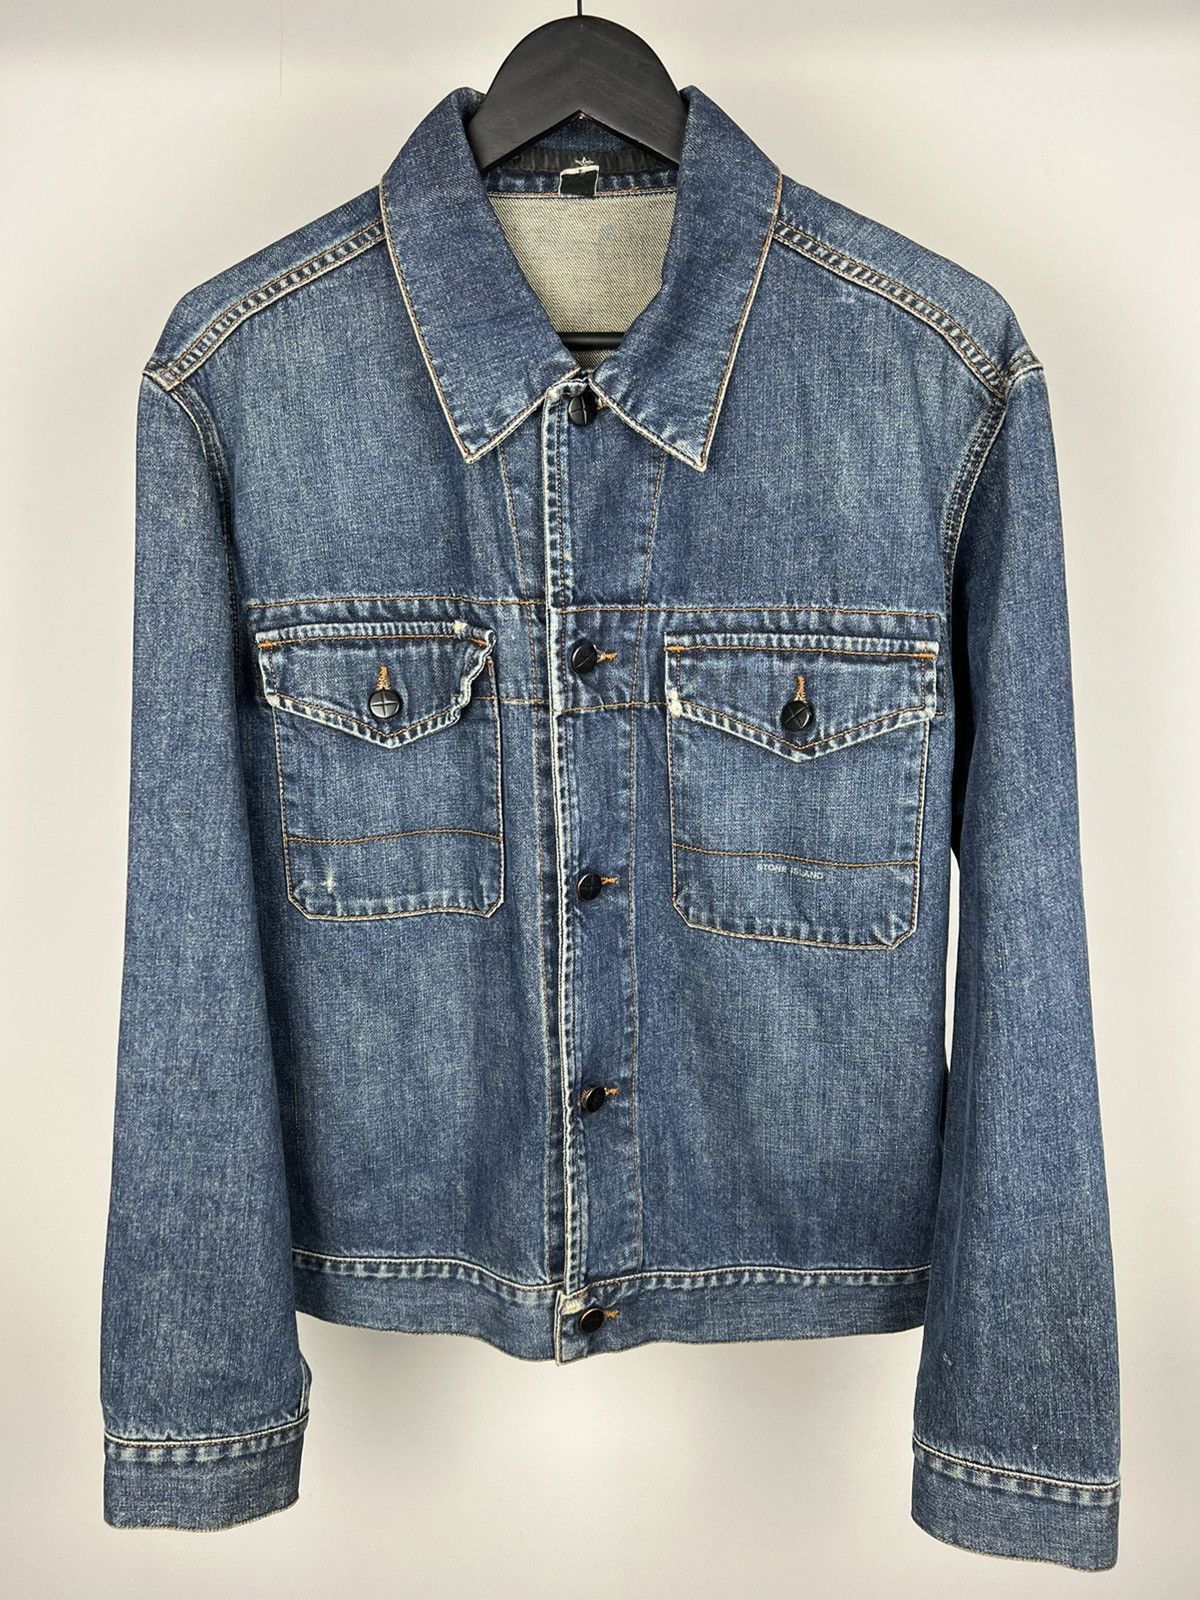 Stone Island Rare vintage denim jeans jacket Stone Island 80-90s | Grailed